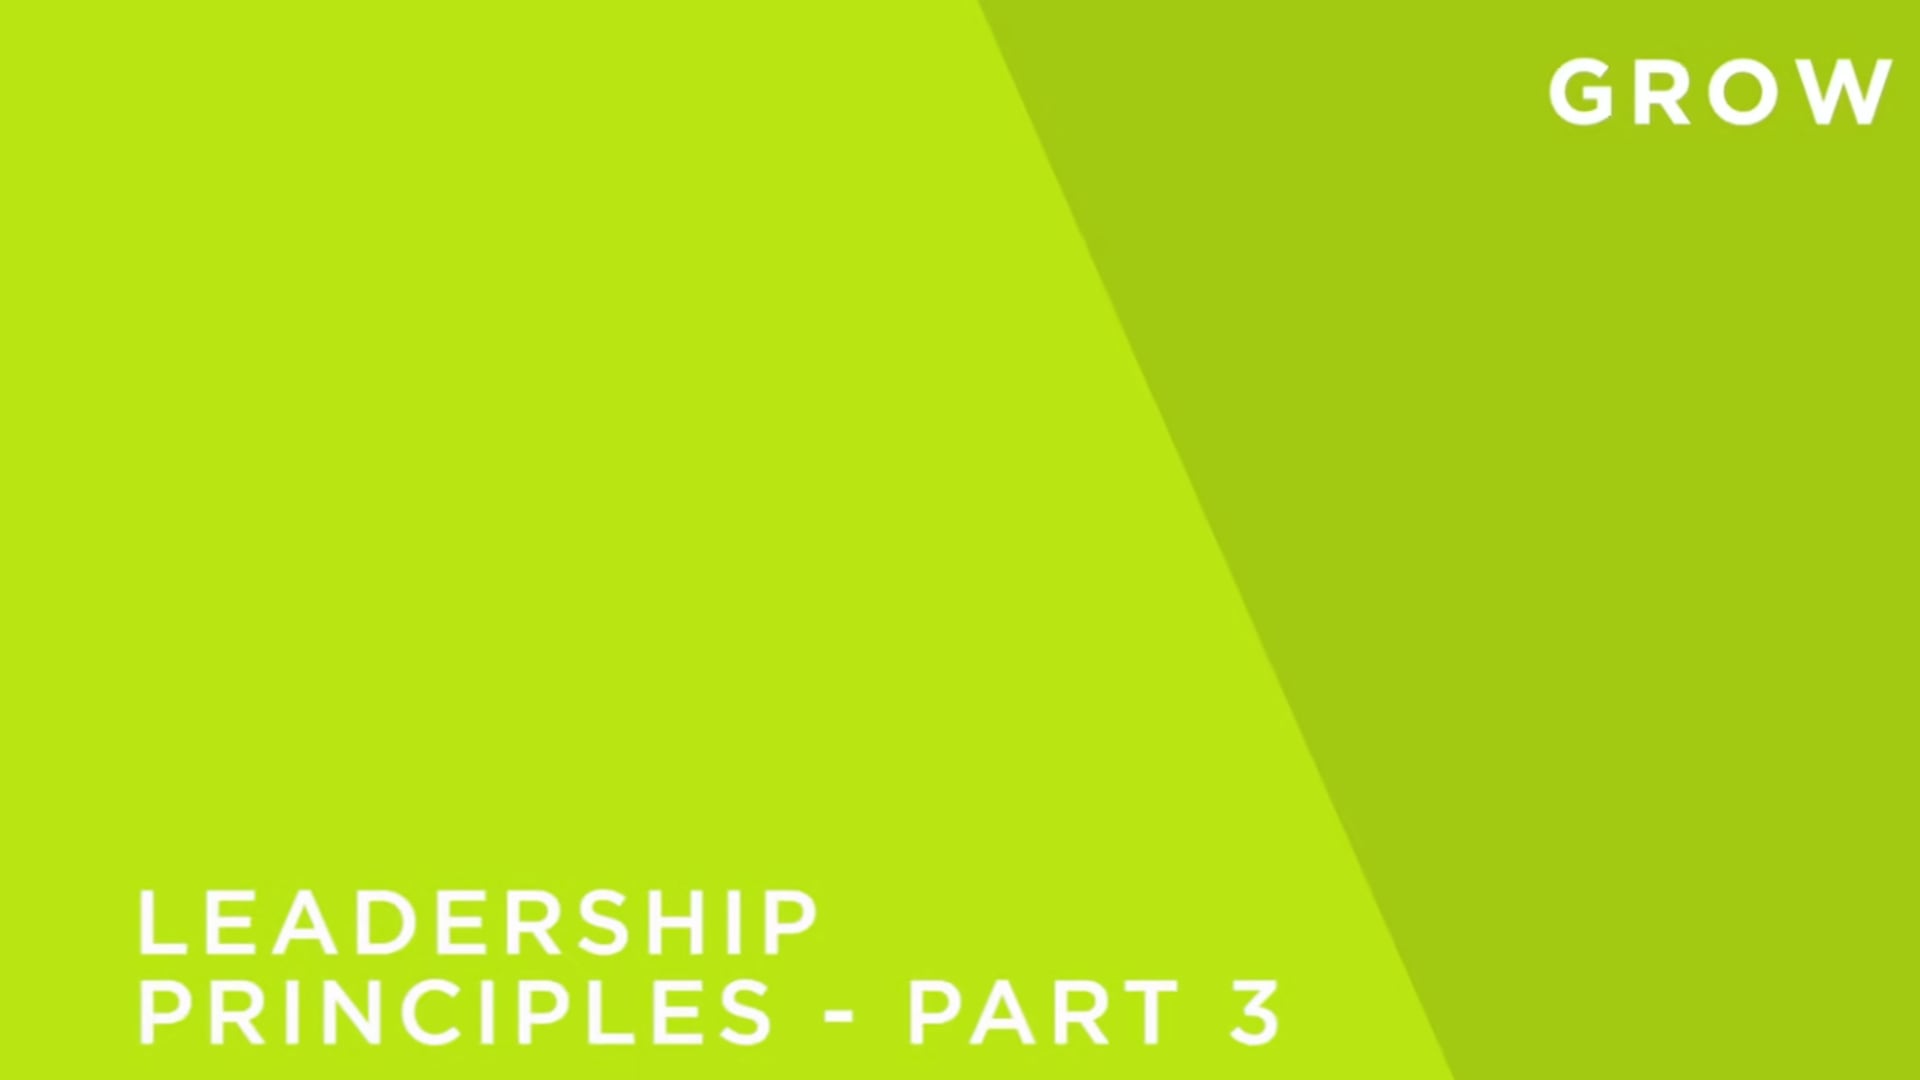 Leadership principles Part 3